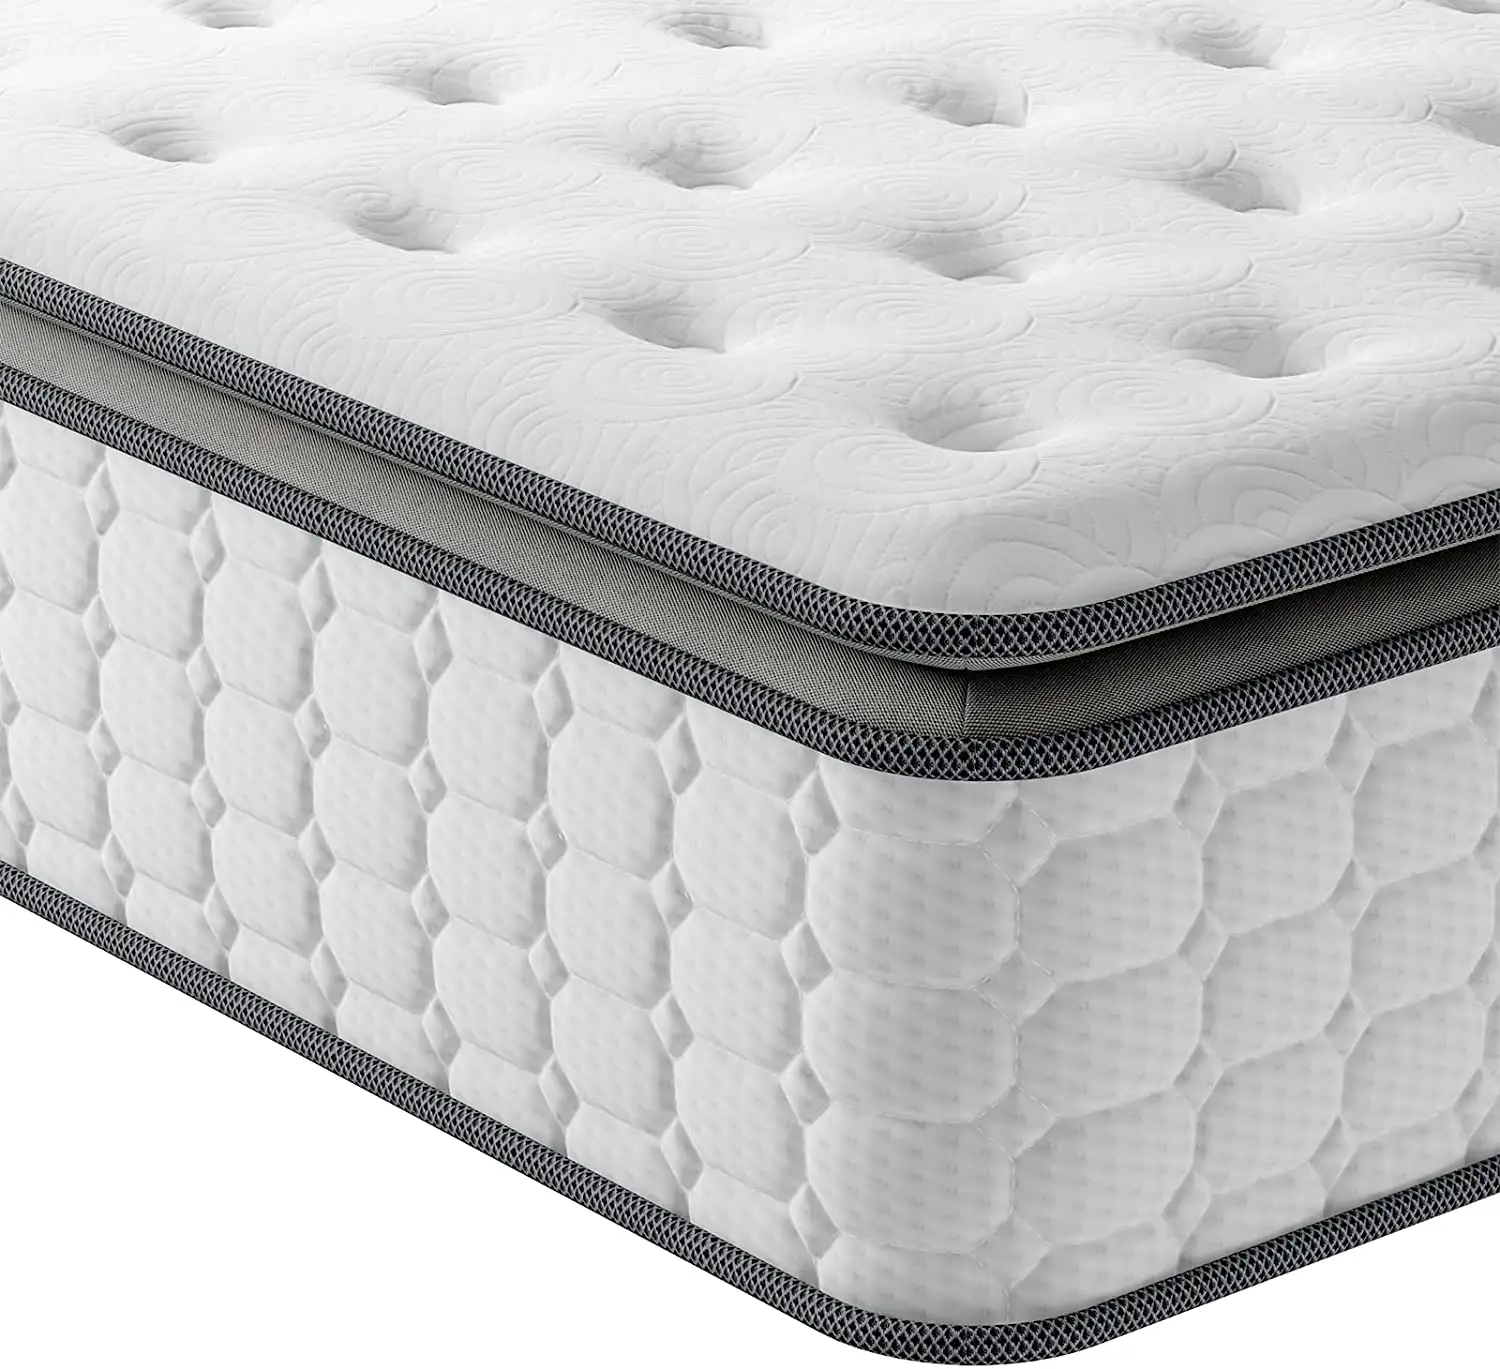 UK FR mattress factory price Gel memory foam mattress pocket bonnel spring all sizes for spring mattress rolled up in a box